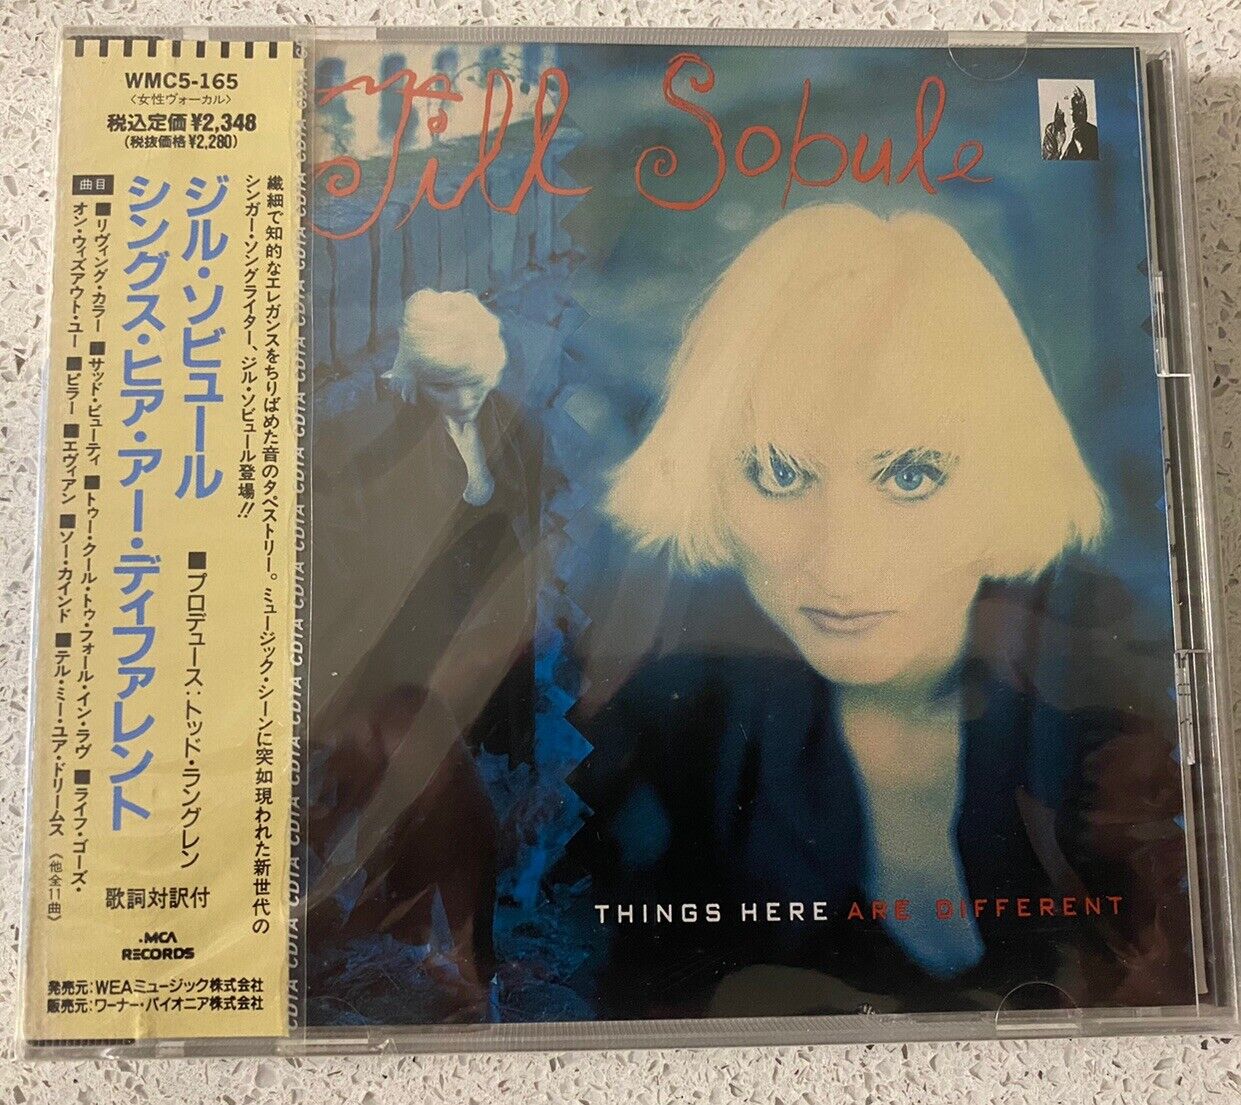 Jill Sobule – Things Here Are Different (CD) JAPAN OBI WMC5-165 Sealed RARE Prom